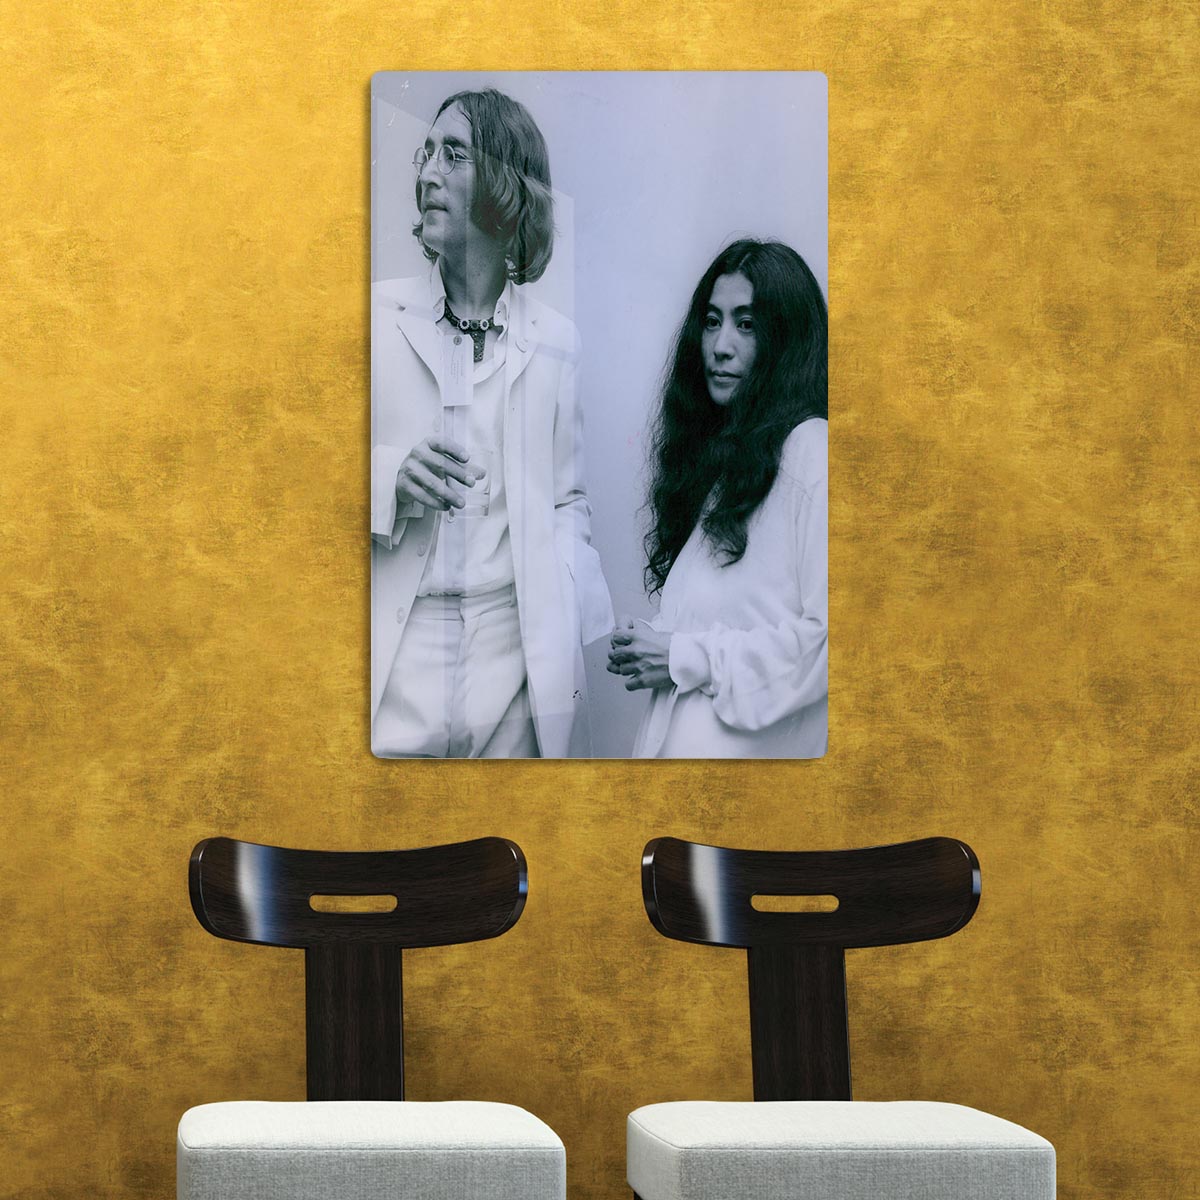 John Lennon and Yoko Ono at an exhibition HD Metal Print